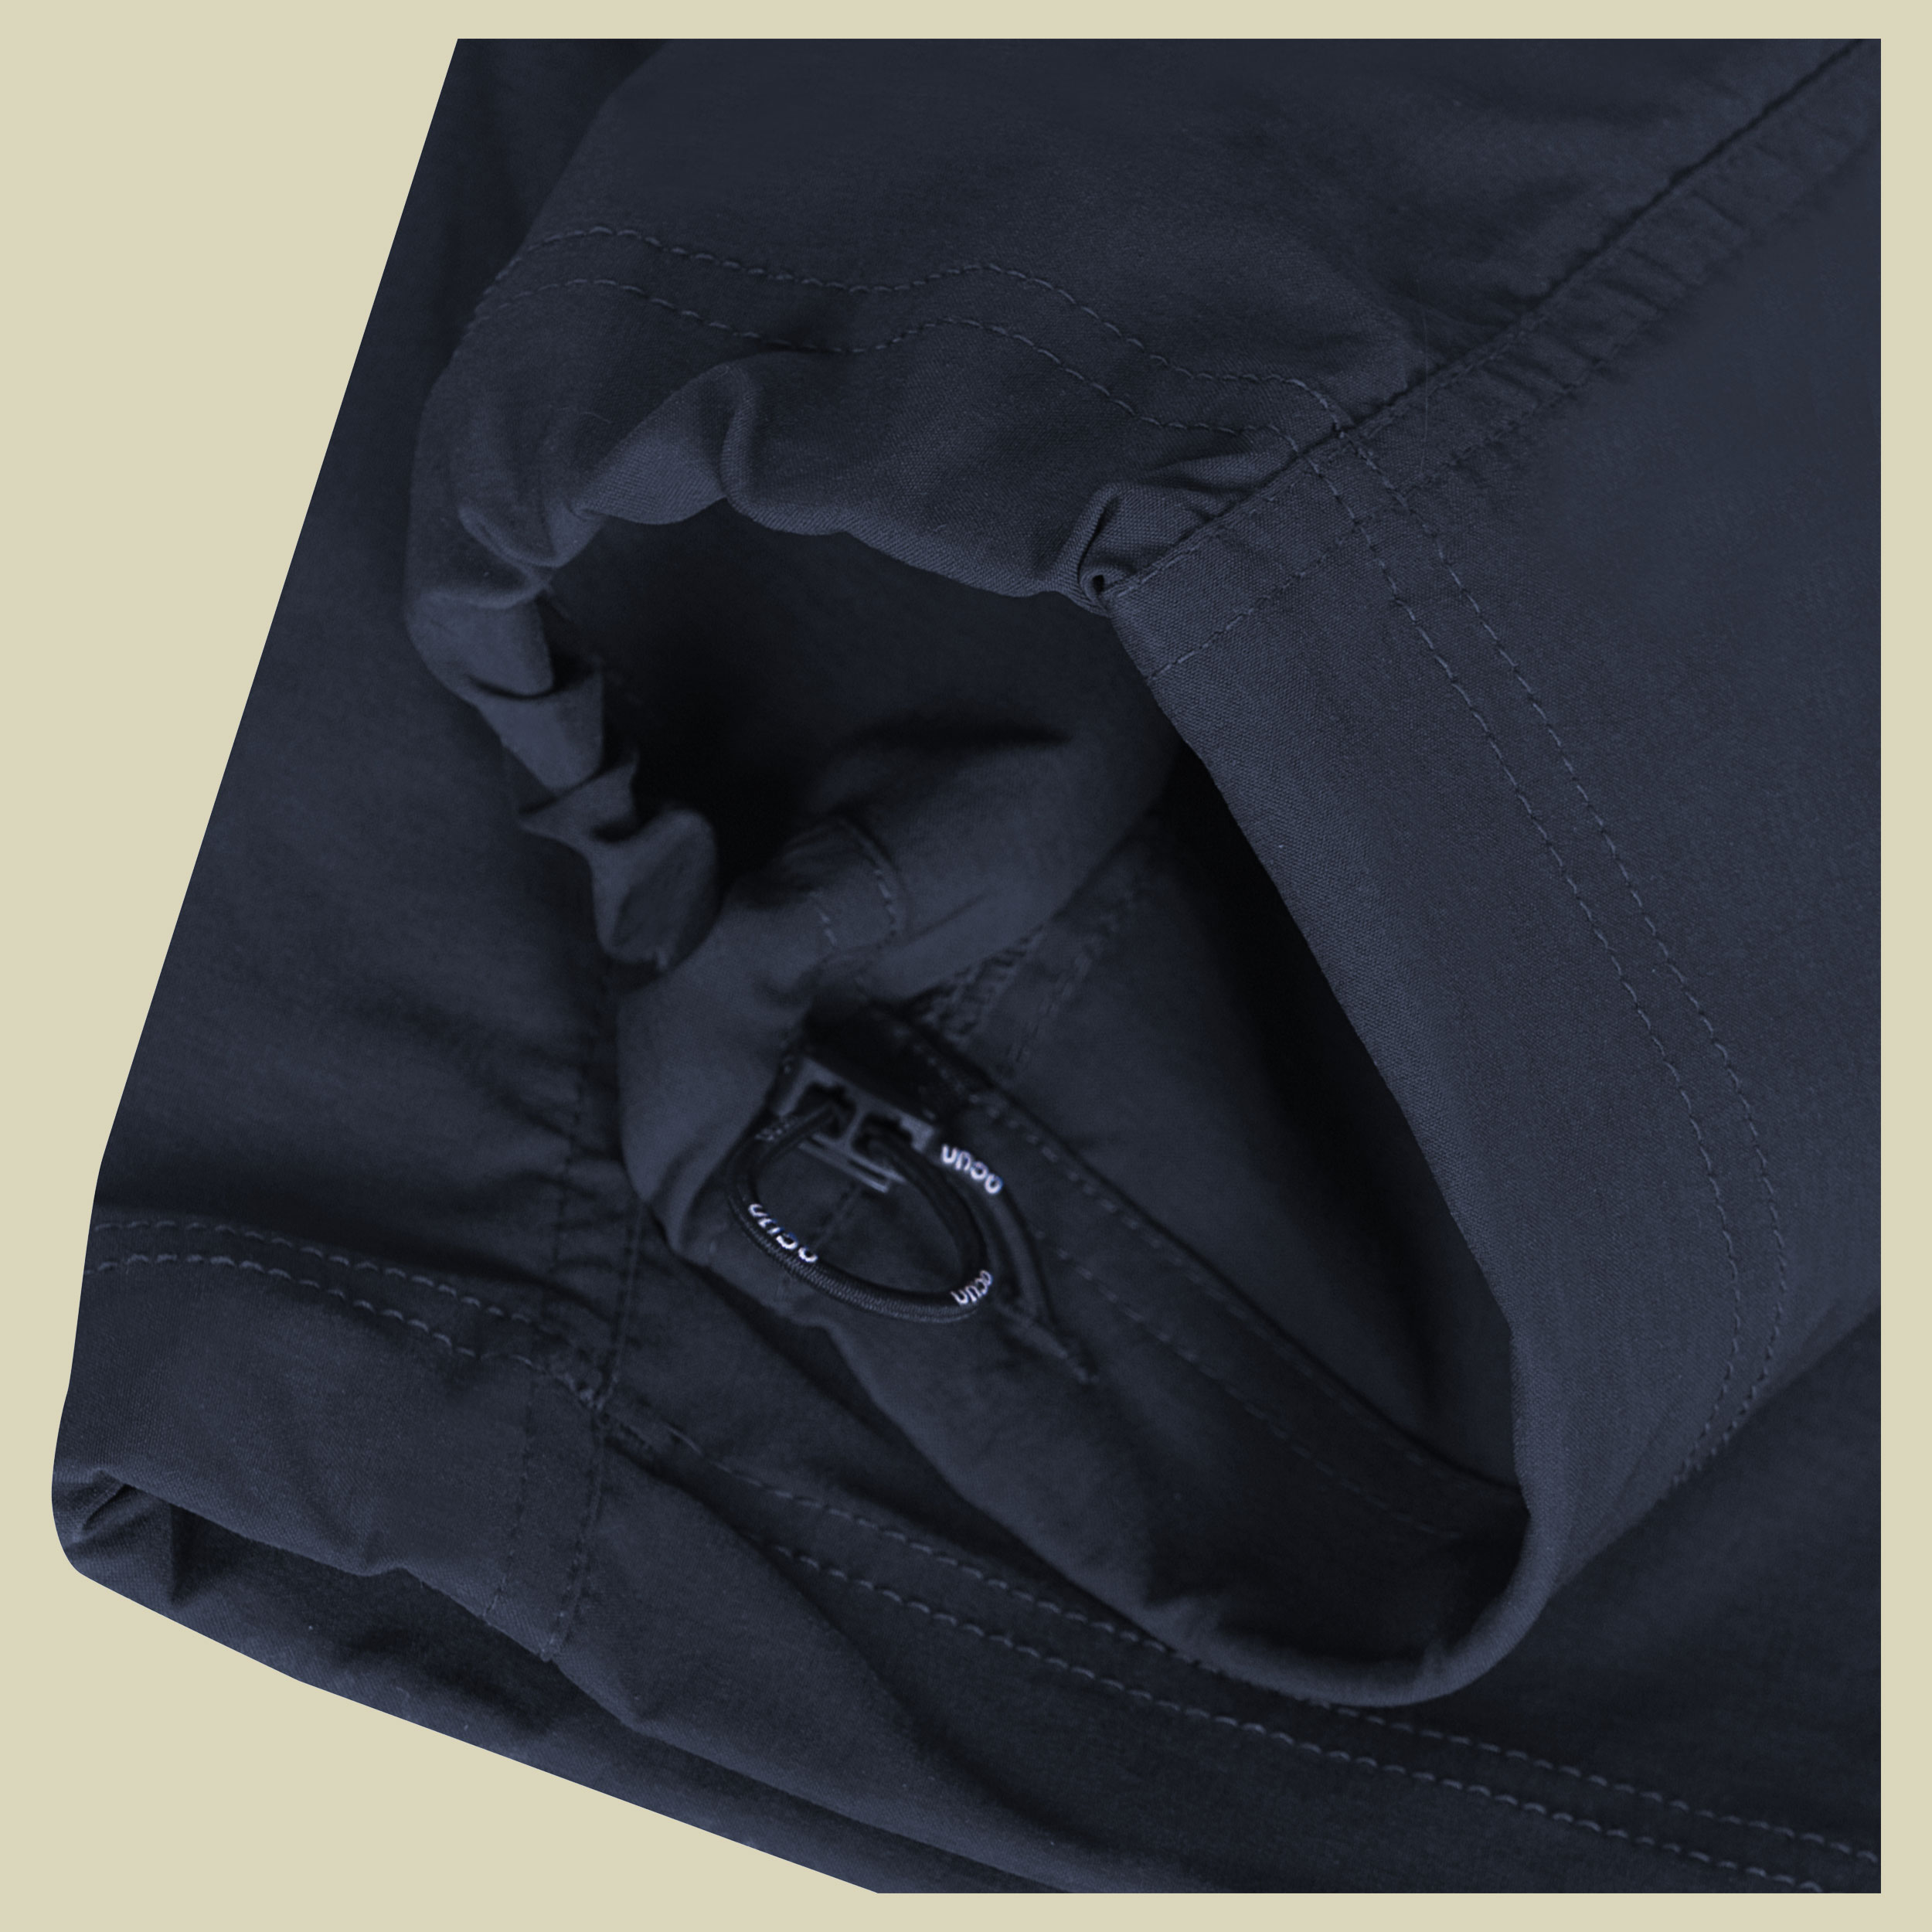 Noya Eco Pants Women Größe L  Farbe anthracite dark navy